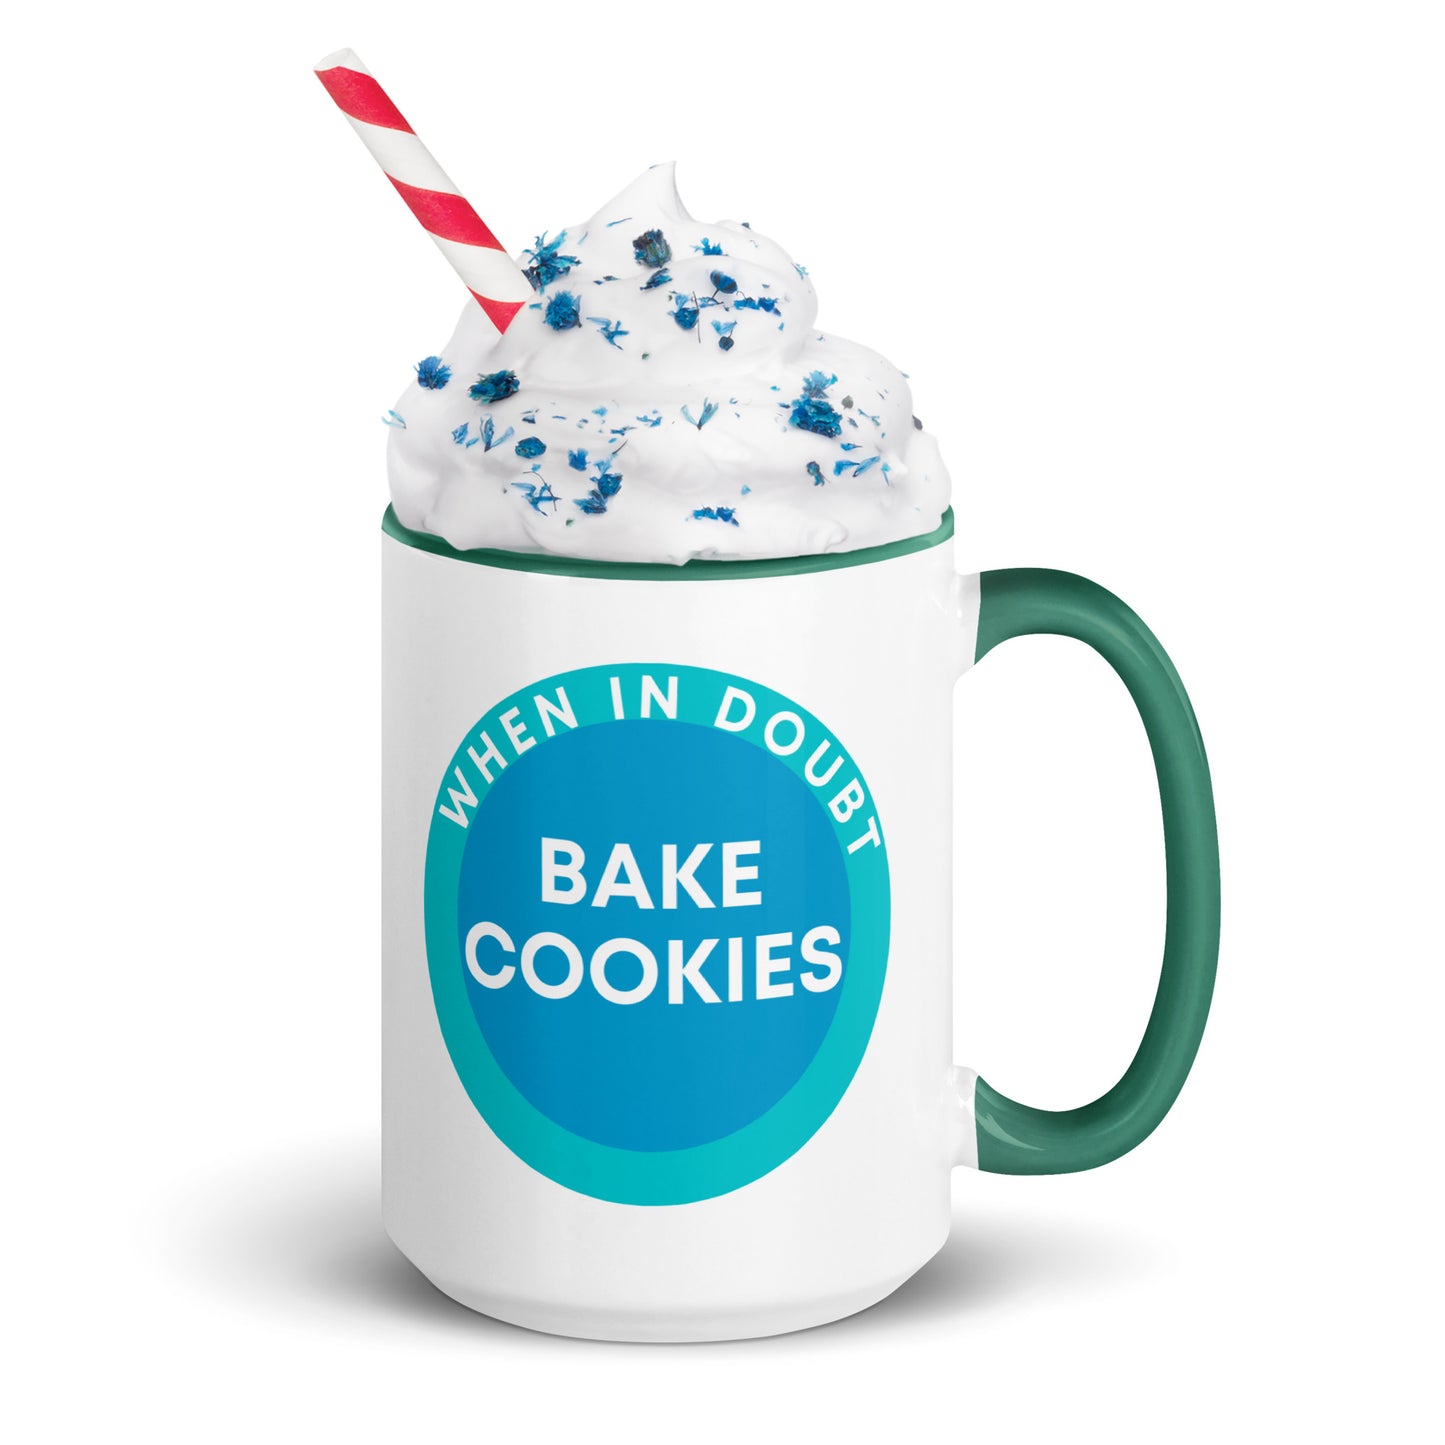 When In Doubt, Bake Cookies Cheerful Baking Mug